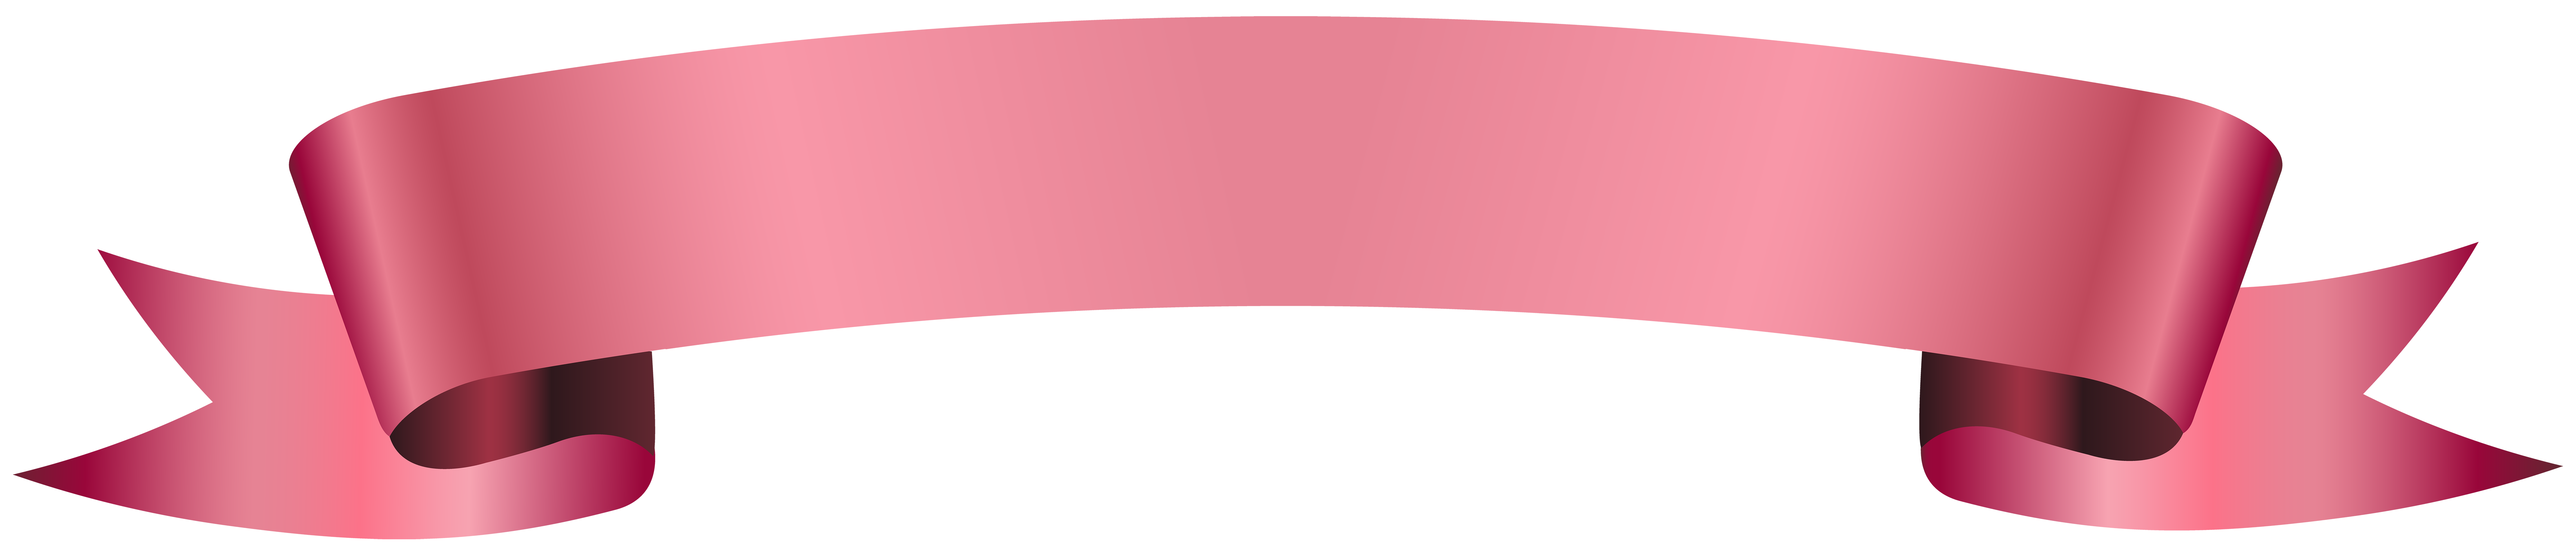 clipart-banner-pink-ribbon-clipart-banner-pink-ribbon-transparent-free